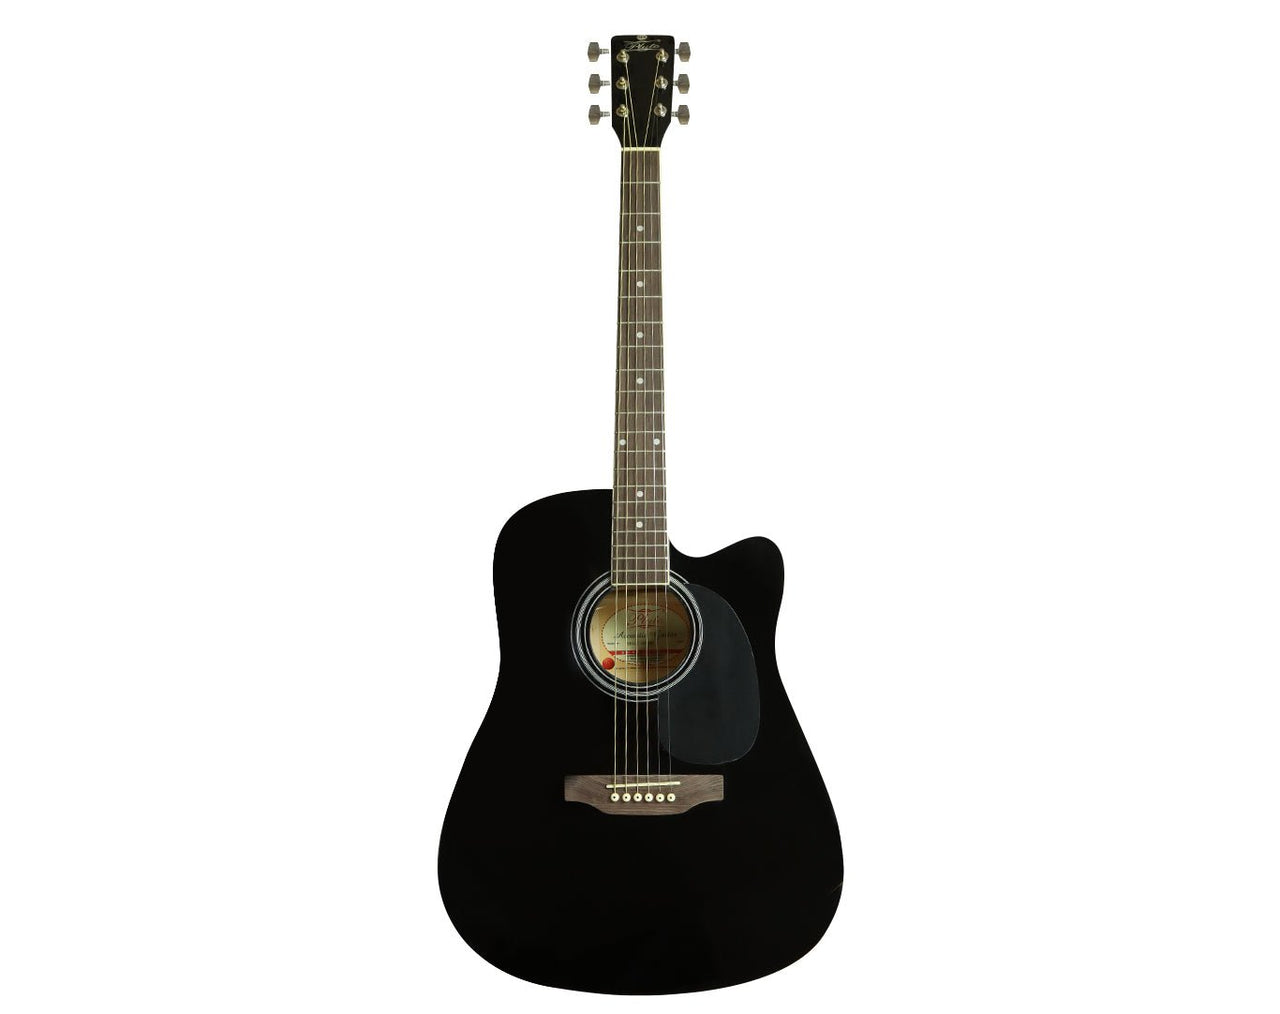 41" Acoustic Guitar Cutaway Black HW41C-201-BK